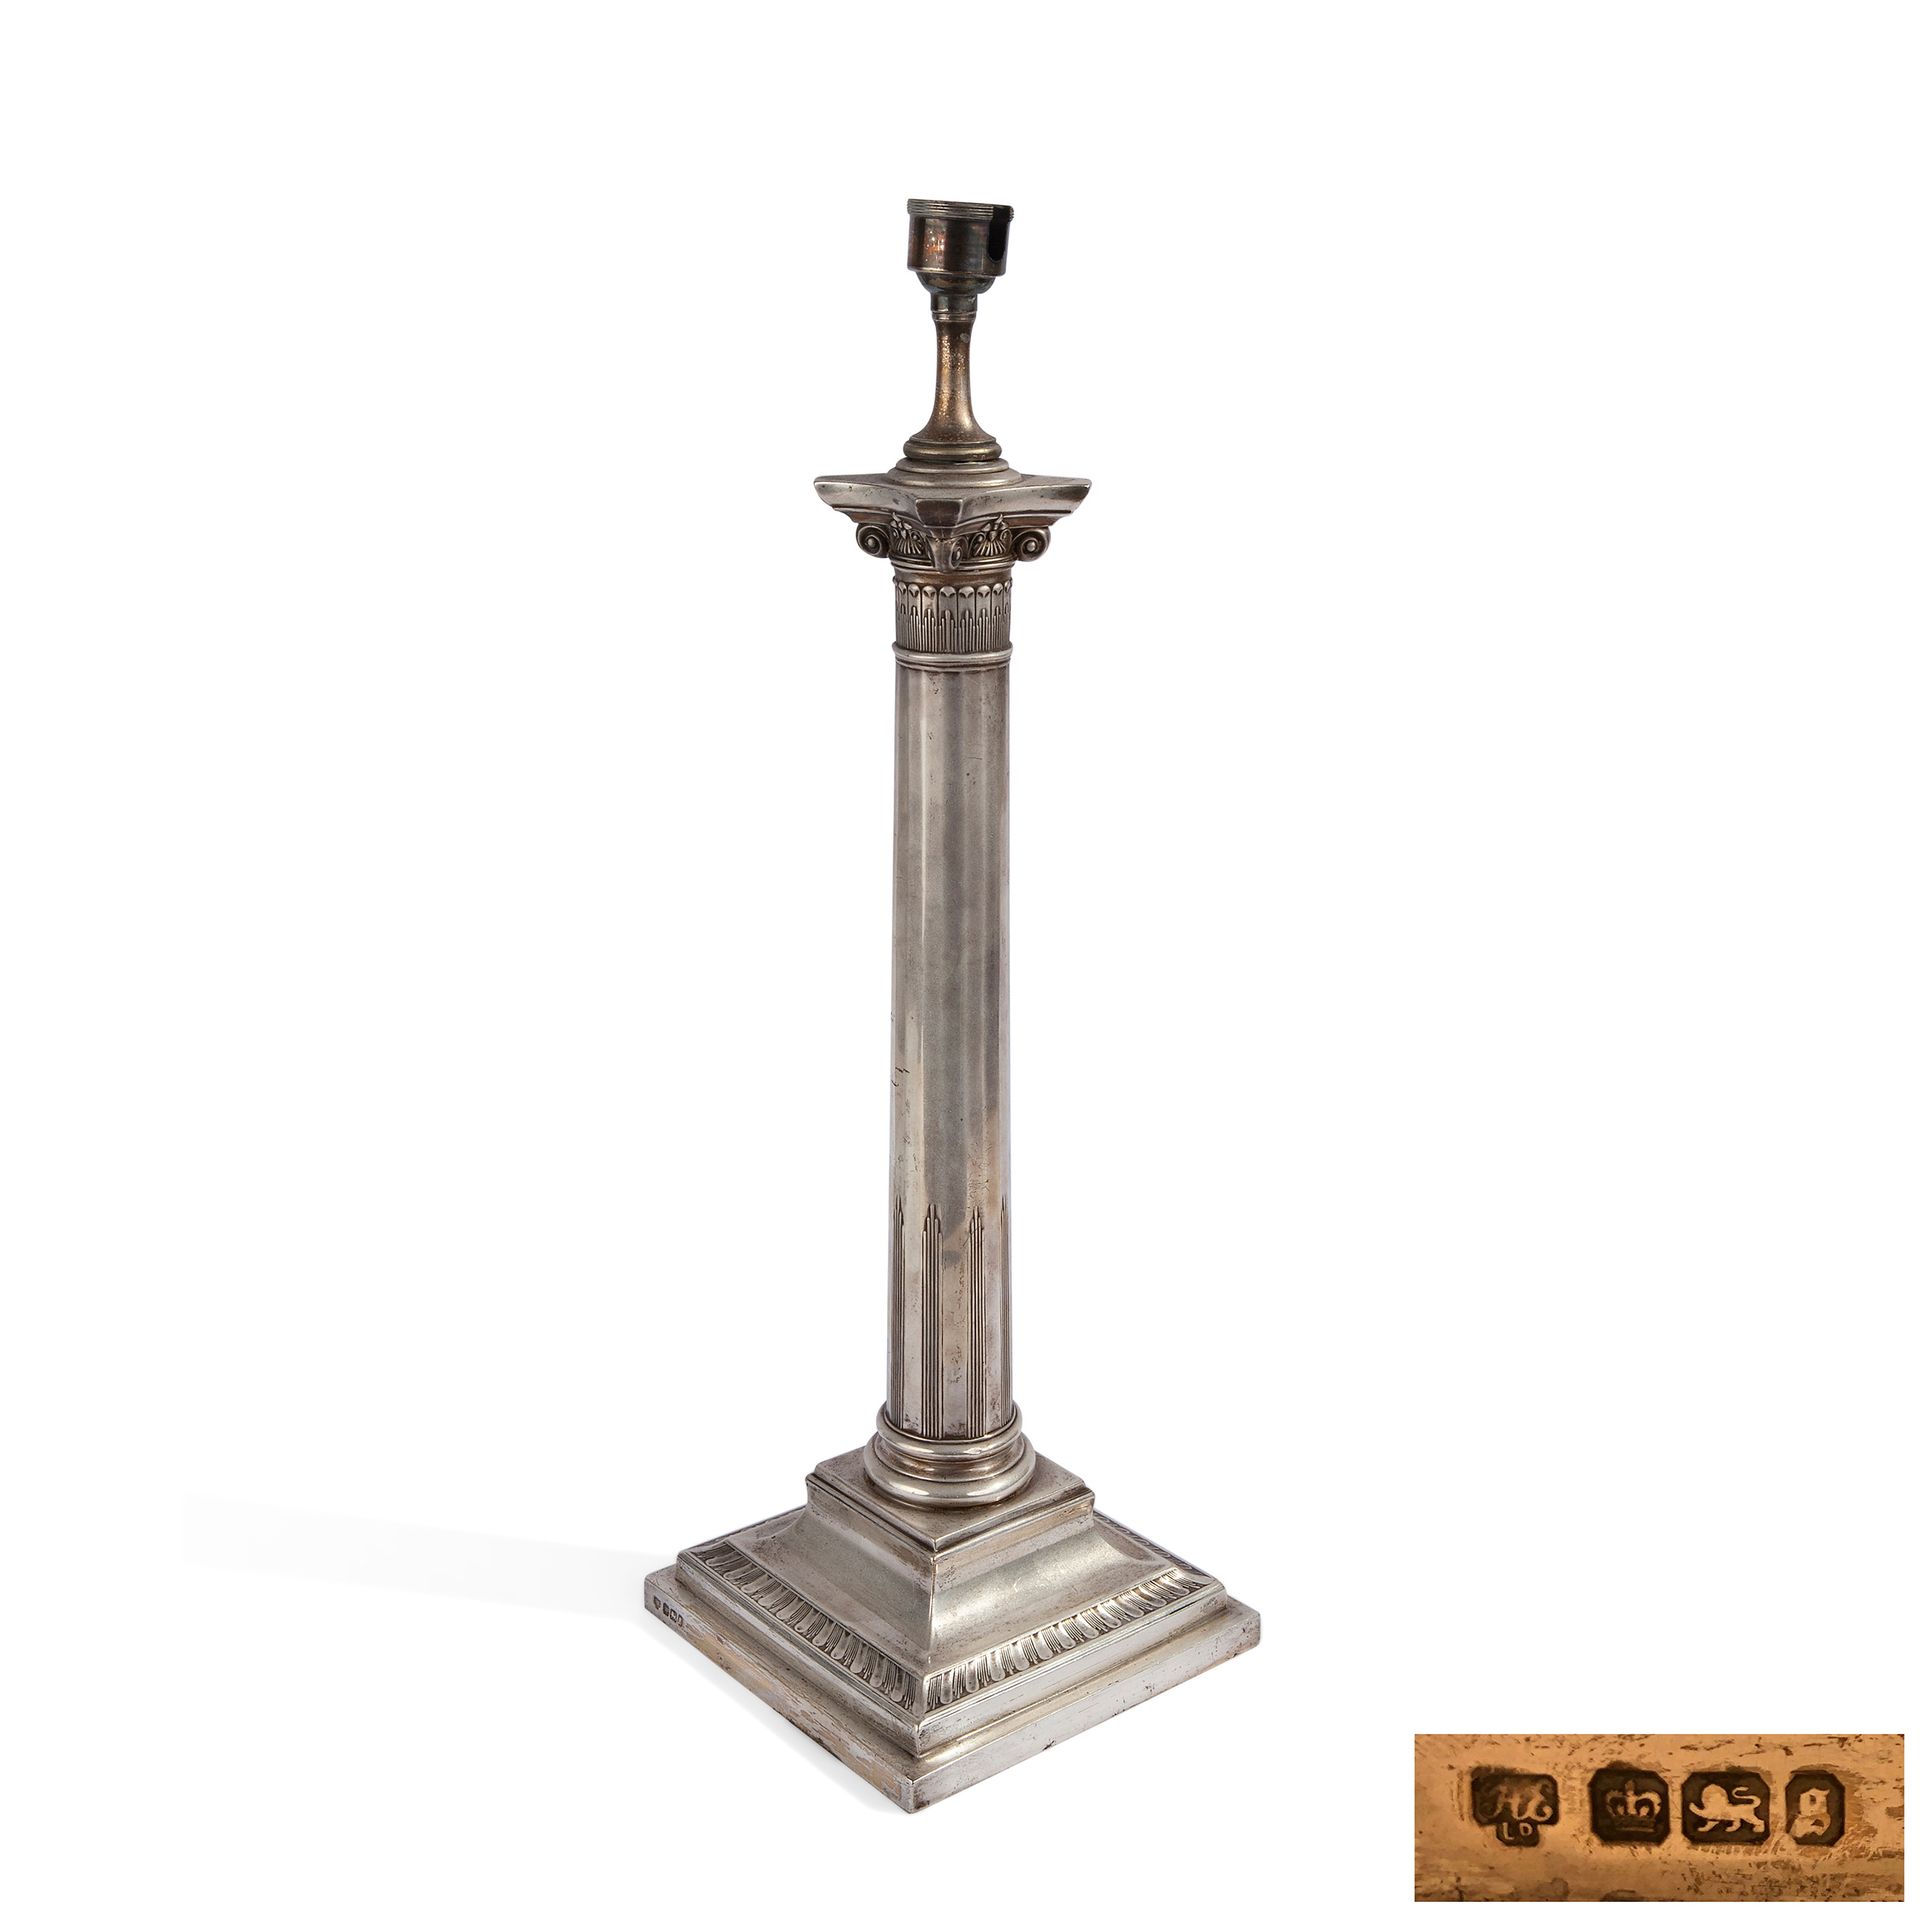 Silver column lamp 伦敦爱德华七世时期，有幻想的资本 尺寸51,5x6.4x6.4英寸。